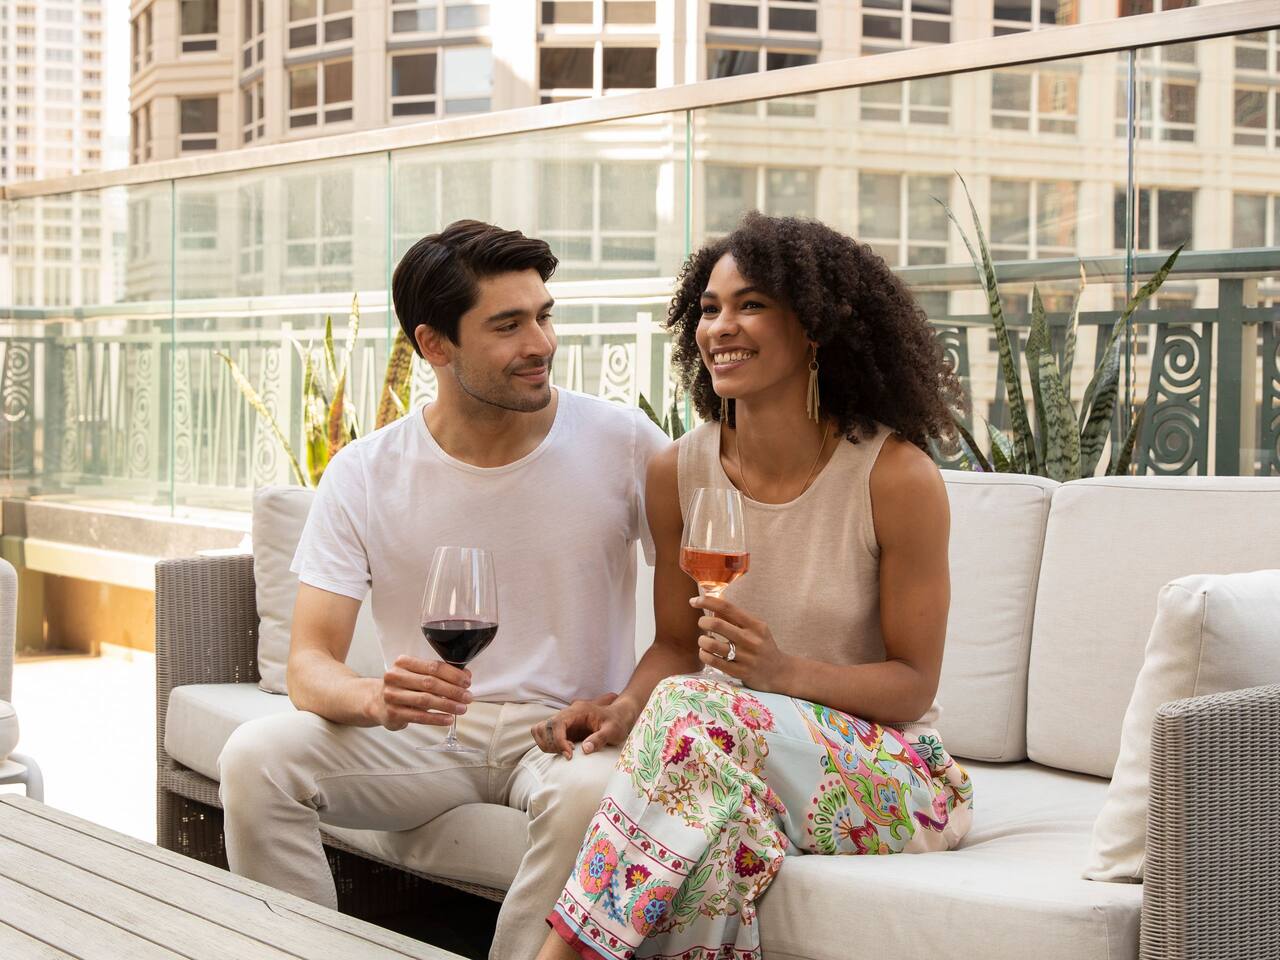 Nomi Rooftop Terrace Drinks Couple